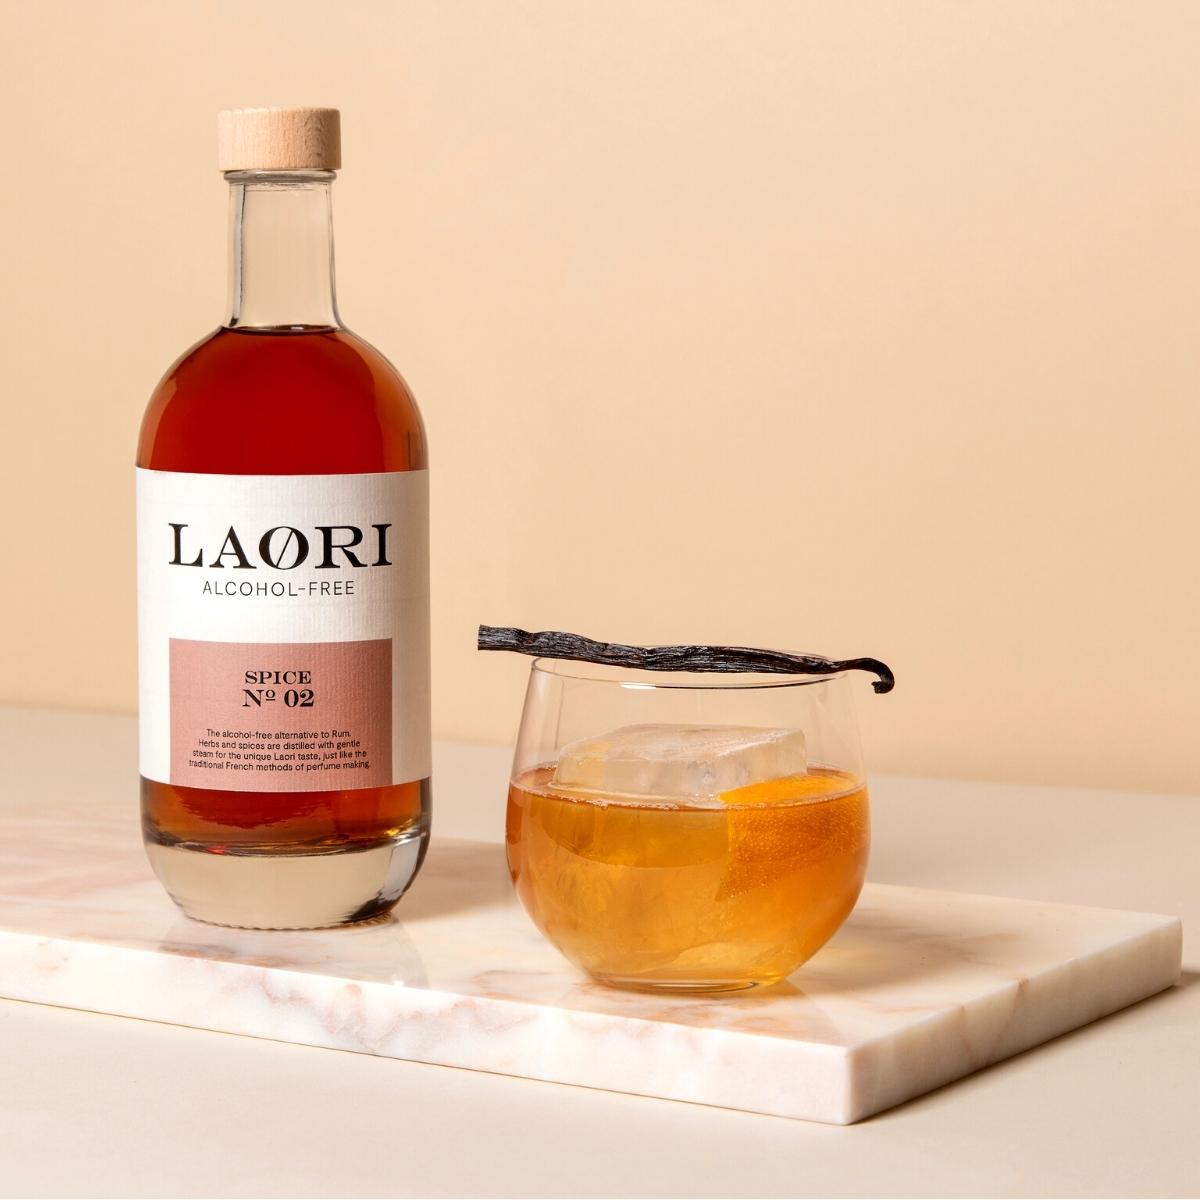 Laori Spice No 2 - Alcohol-Free Rum